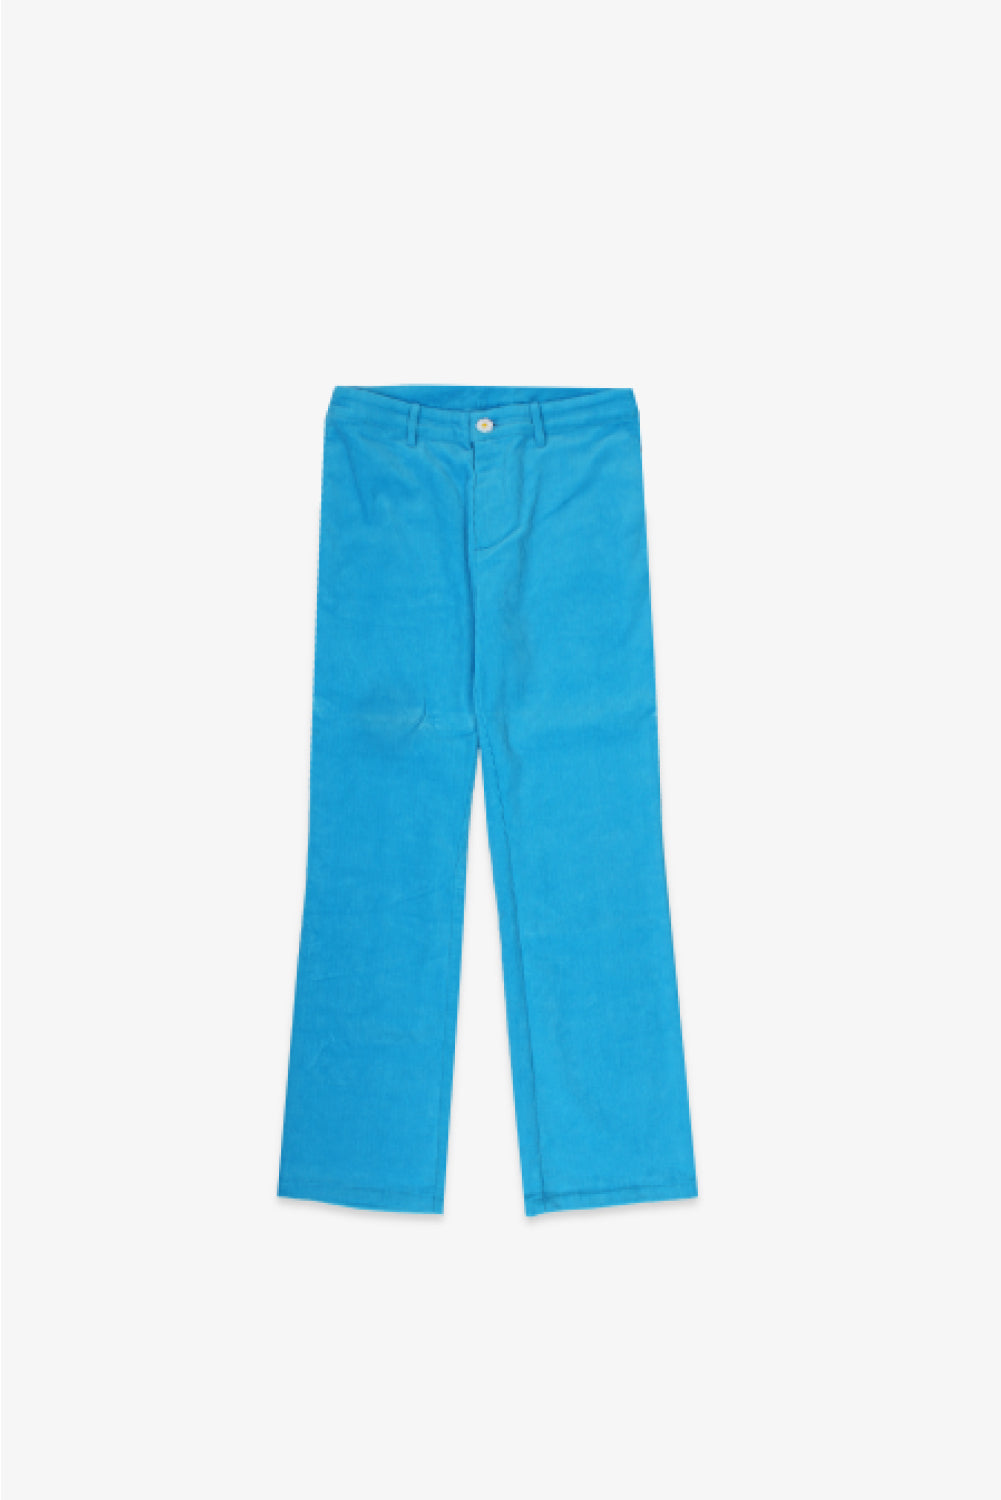 Capri Blue Flared Corduroy Trousers